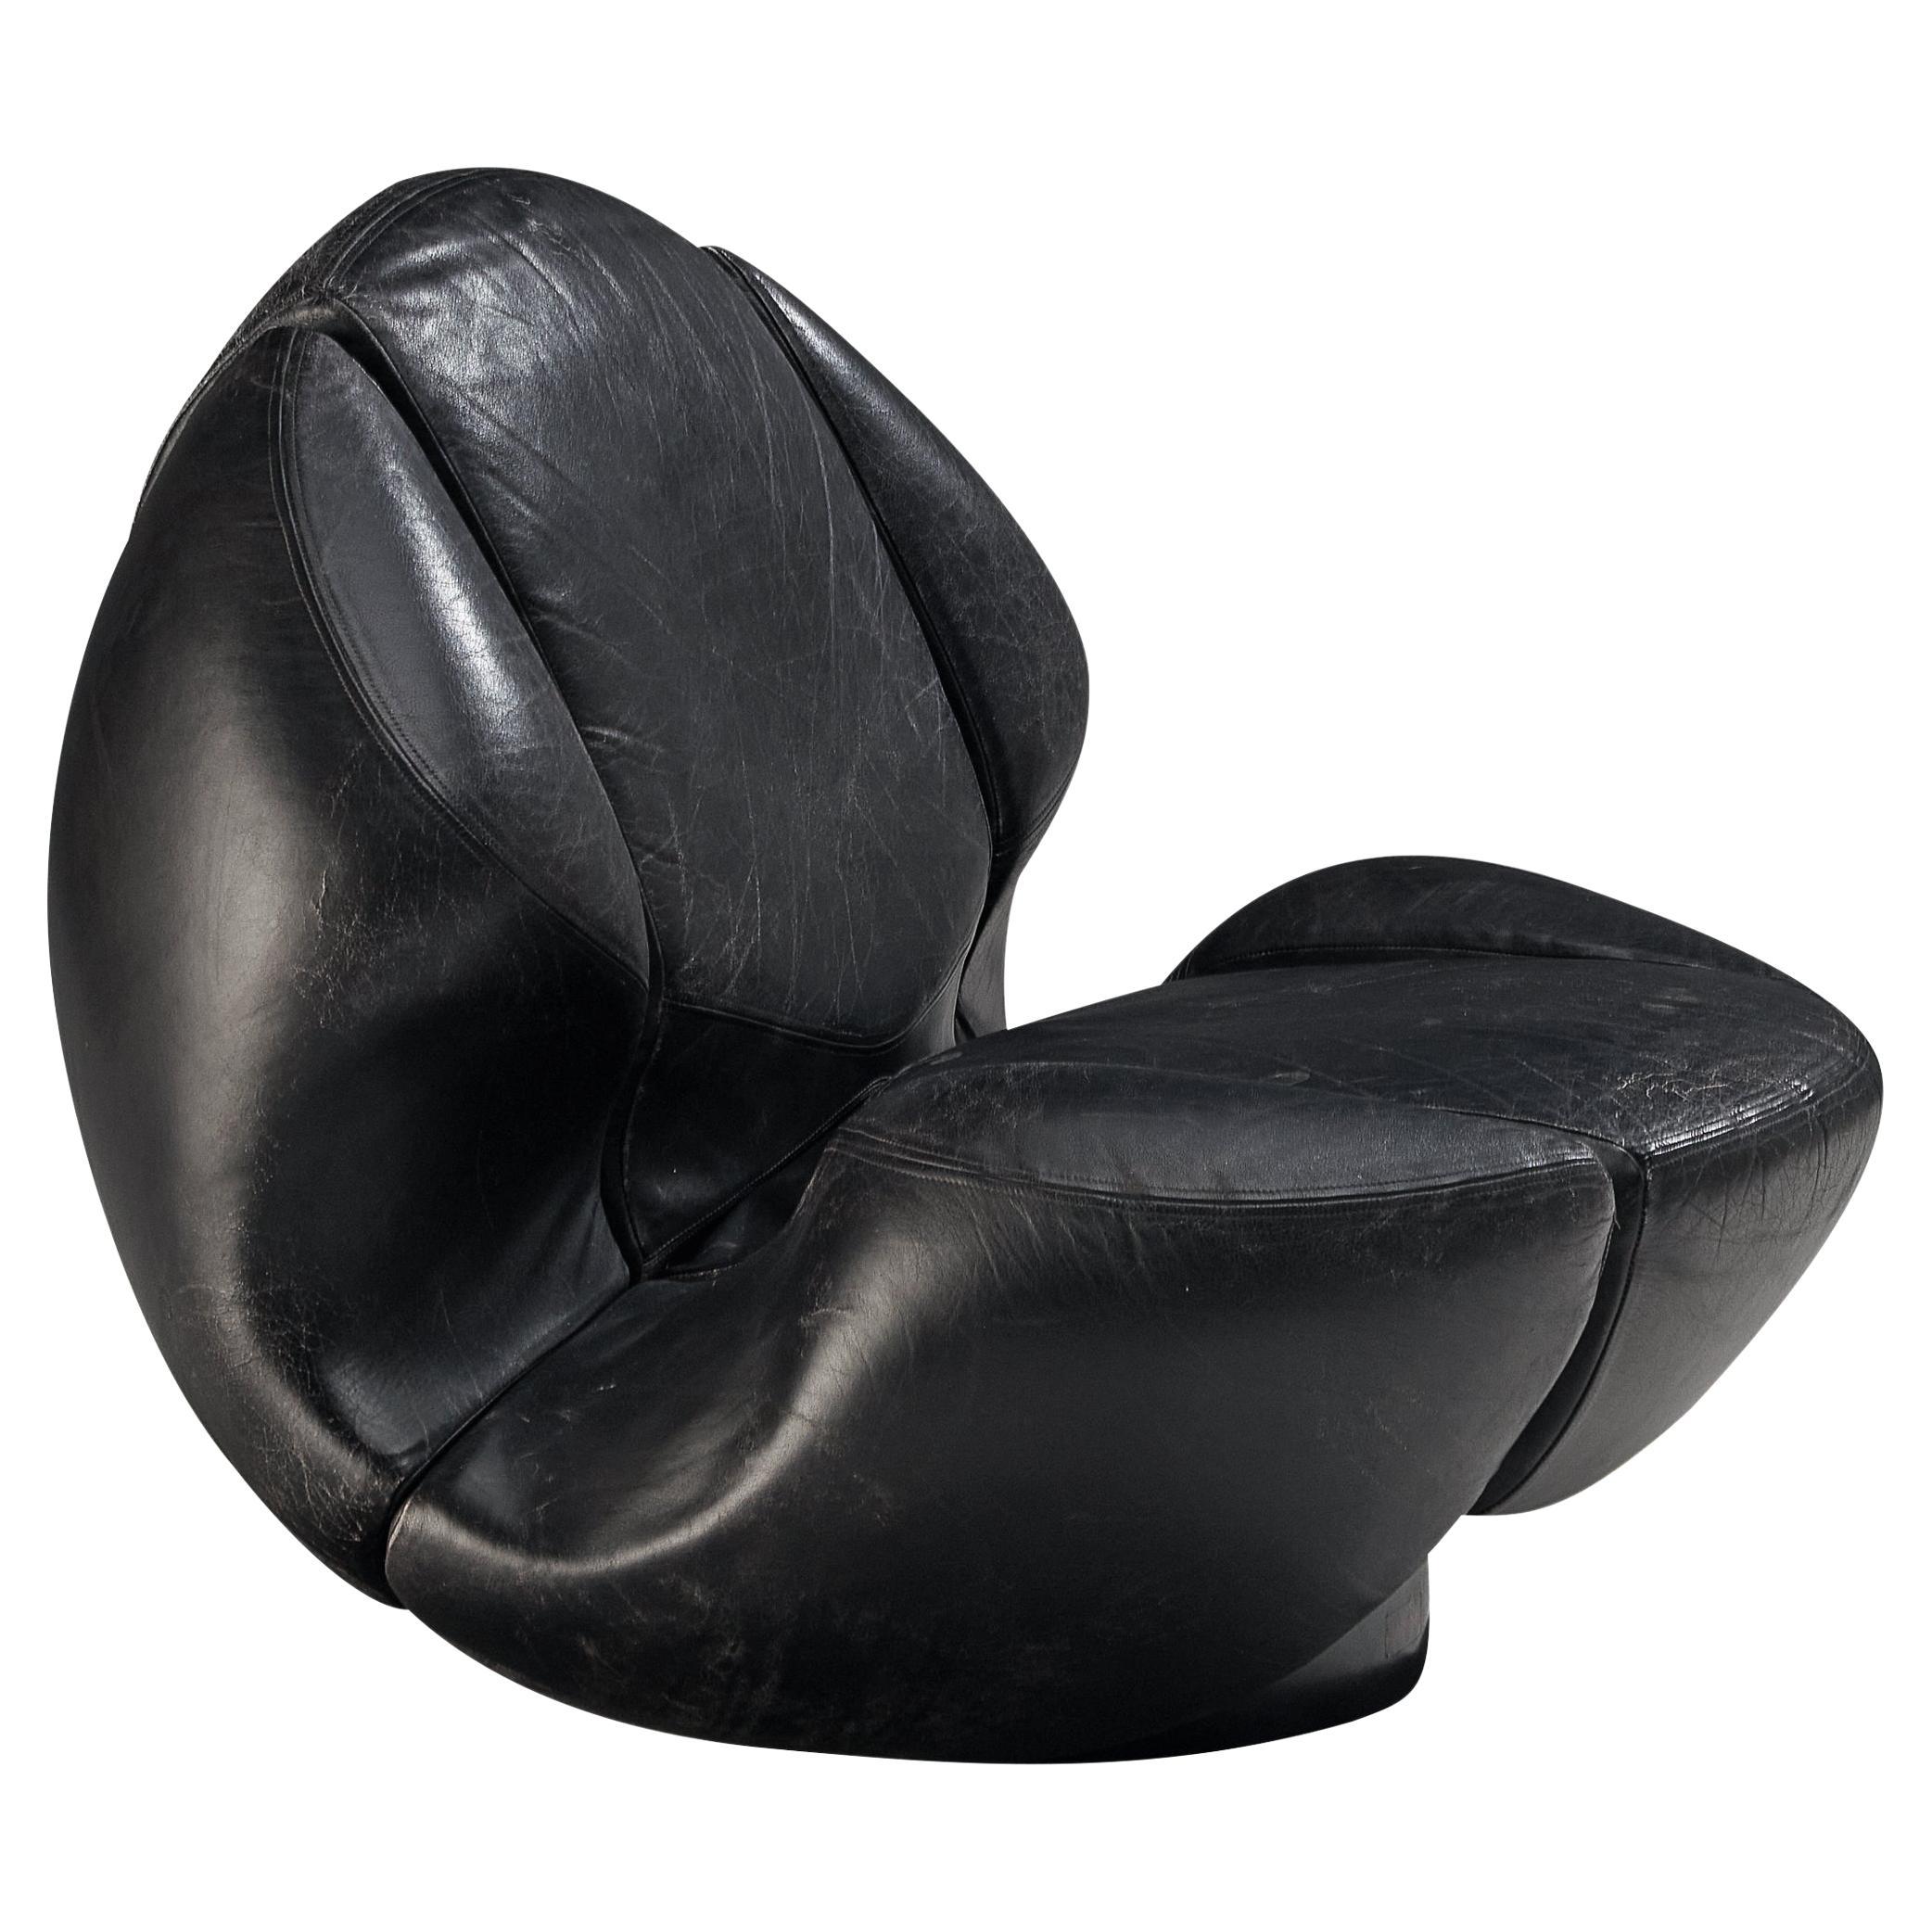 Mario Marenco for Comfortline 'Nova' Lounge Chair in Black Leather 